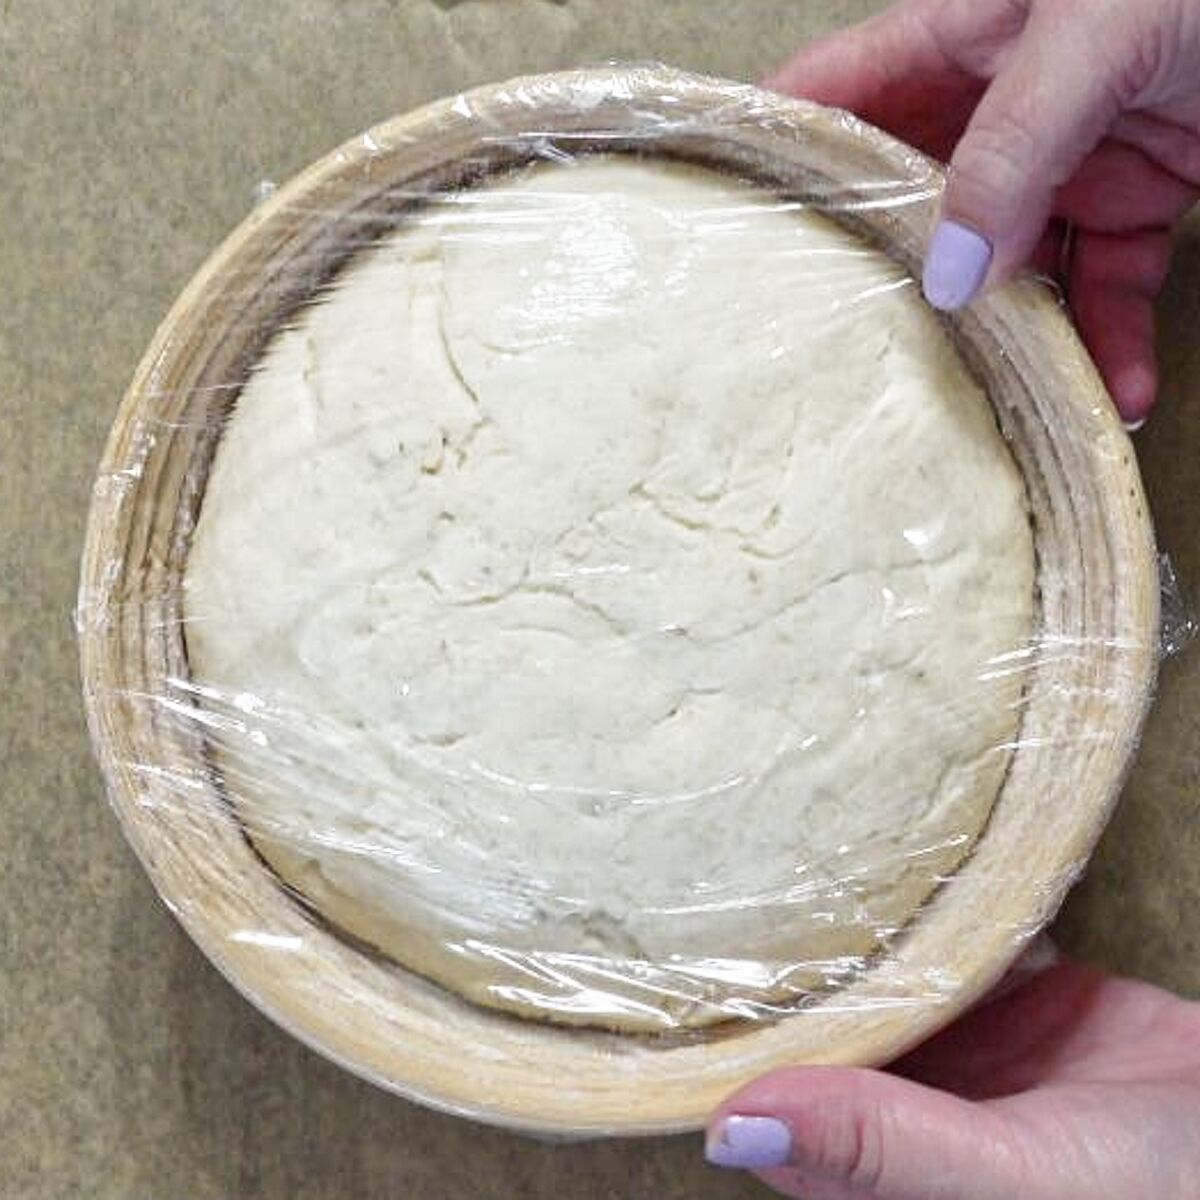 risen dough in banneton covered in plastic.